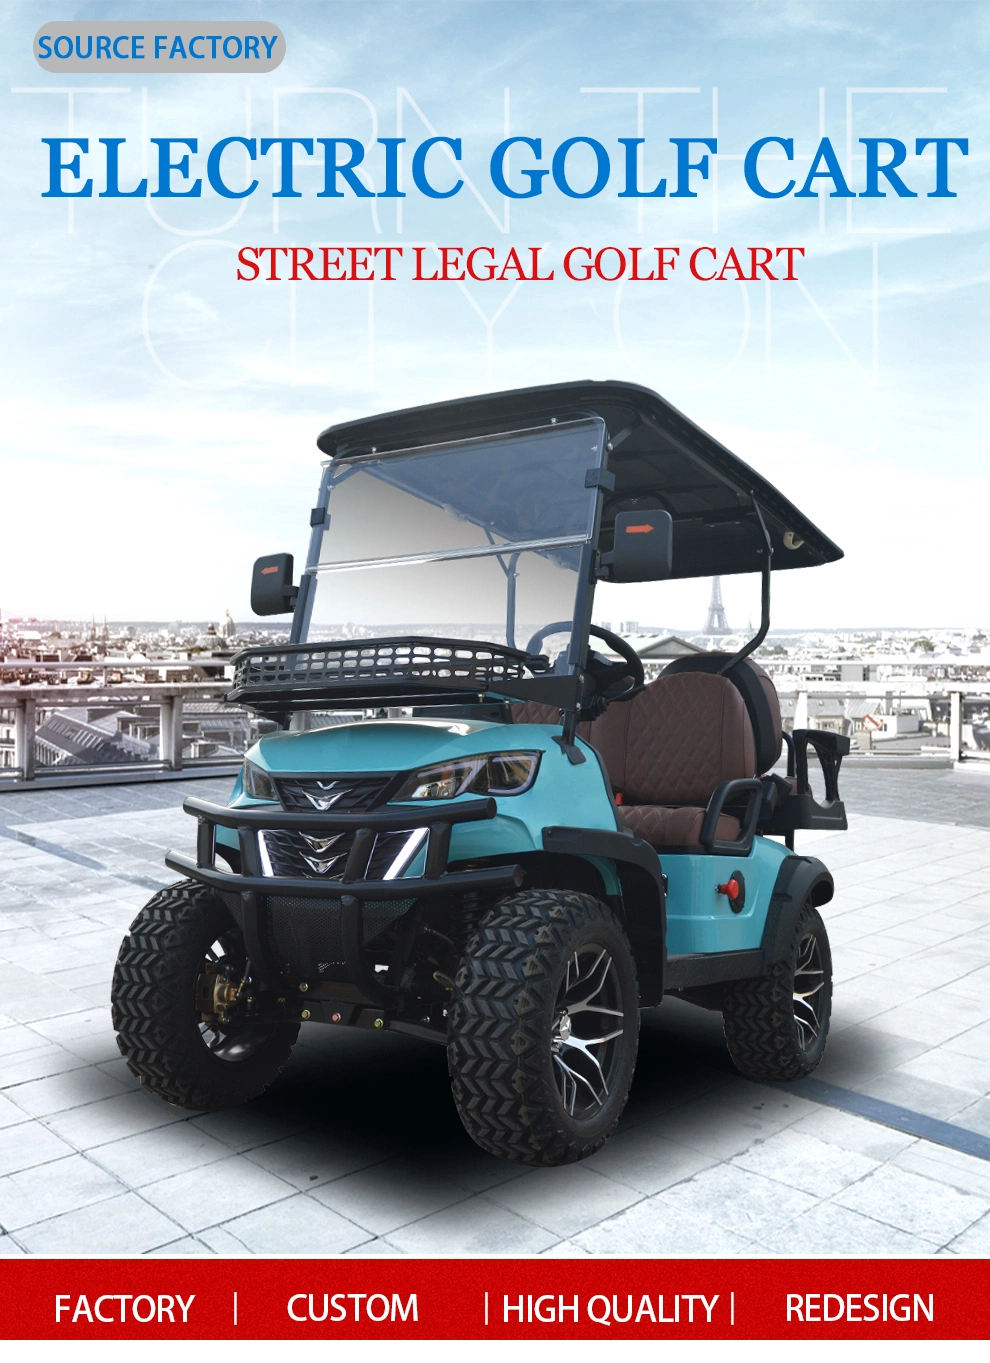 Electric Golf Cart 4 6 Seater off-Road Golf Cart Street Legal